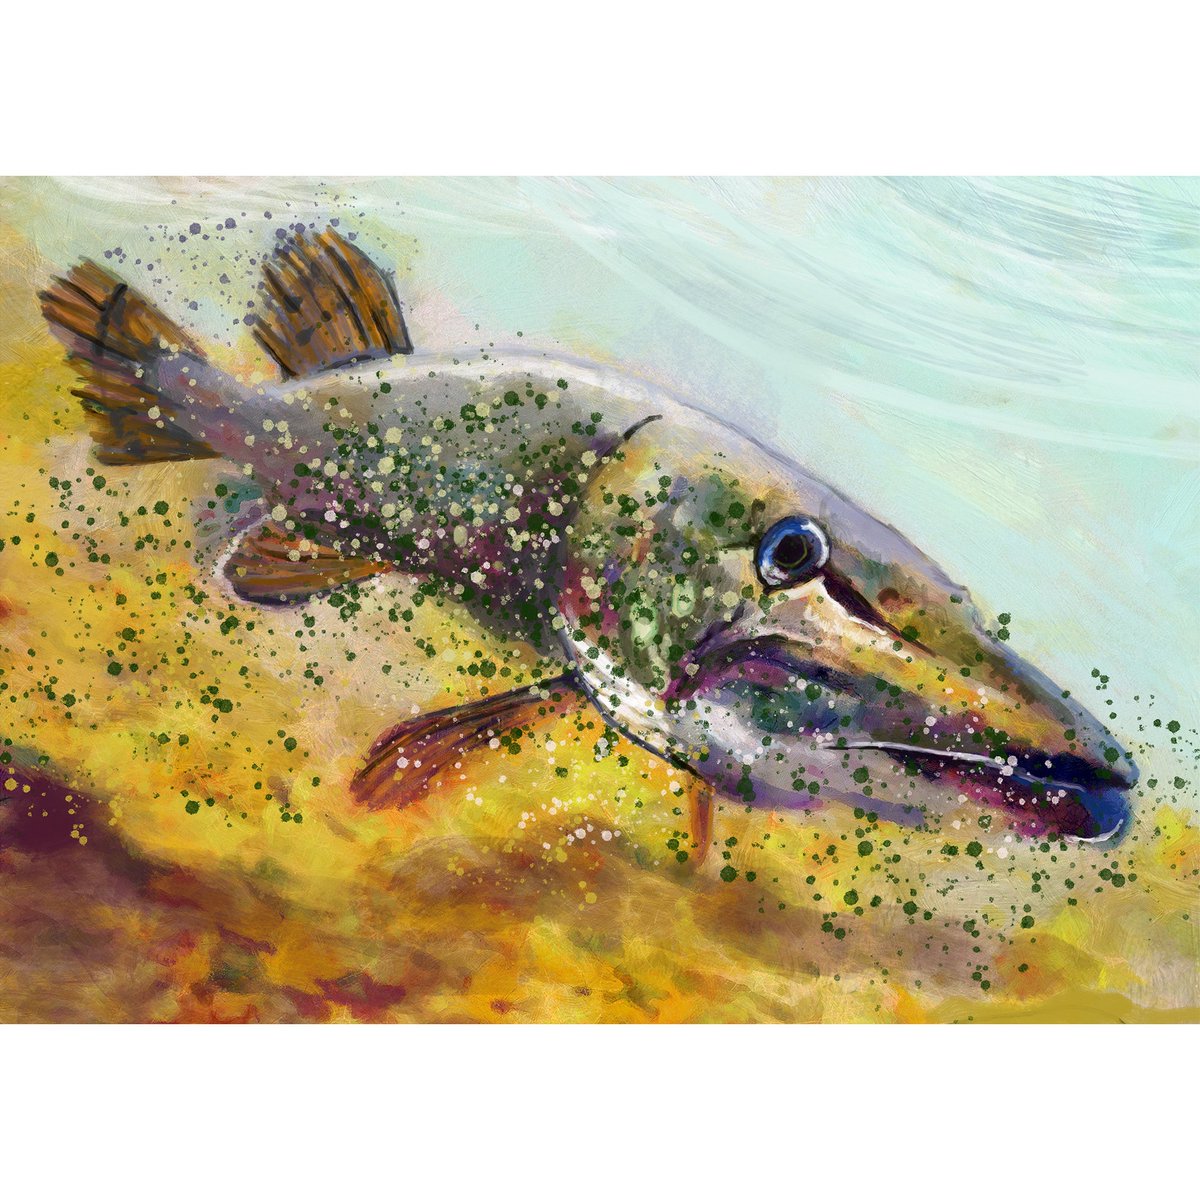 Northern Pike Abstract Art Print, Freshwater Fishing Wall Art Print, Hand Signed Fishing Gift By Jack Tarpon, Choice Of Sizes 11x14 12x16 tuppu.net/5d580952 #Etsy #DogFishArtCo #PikeFishing